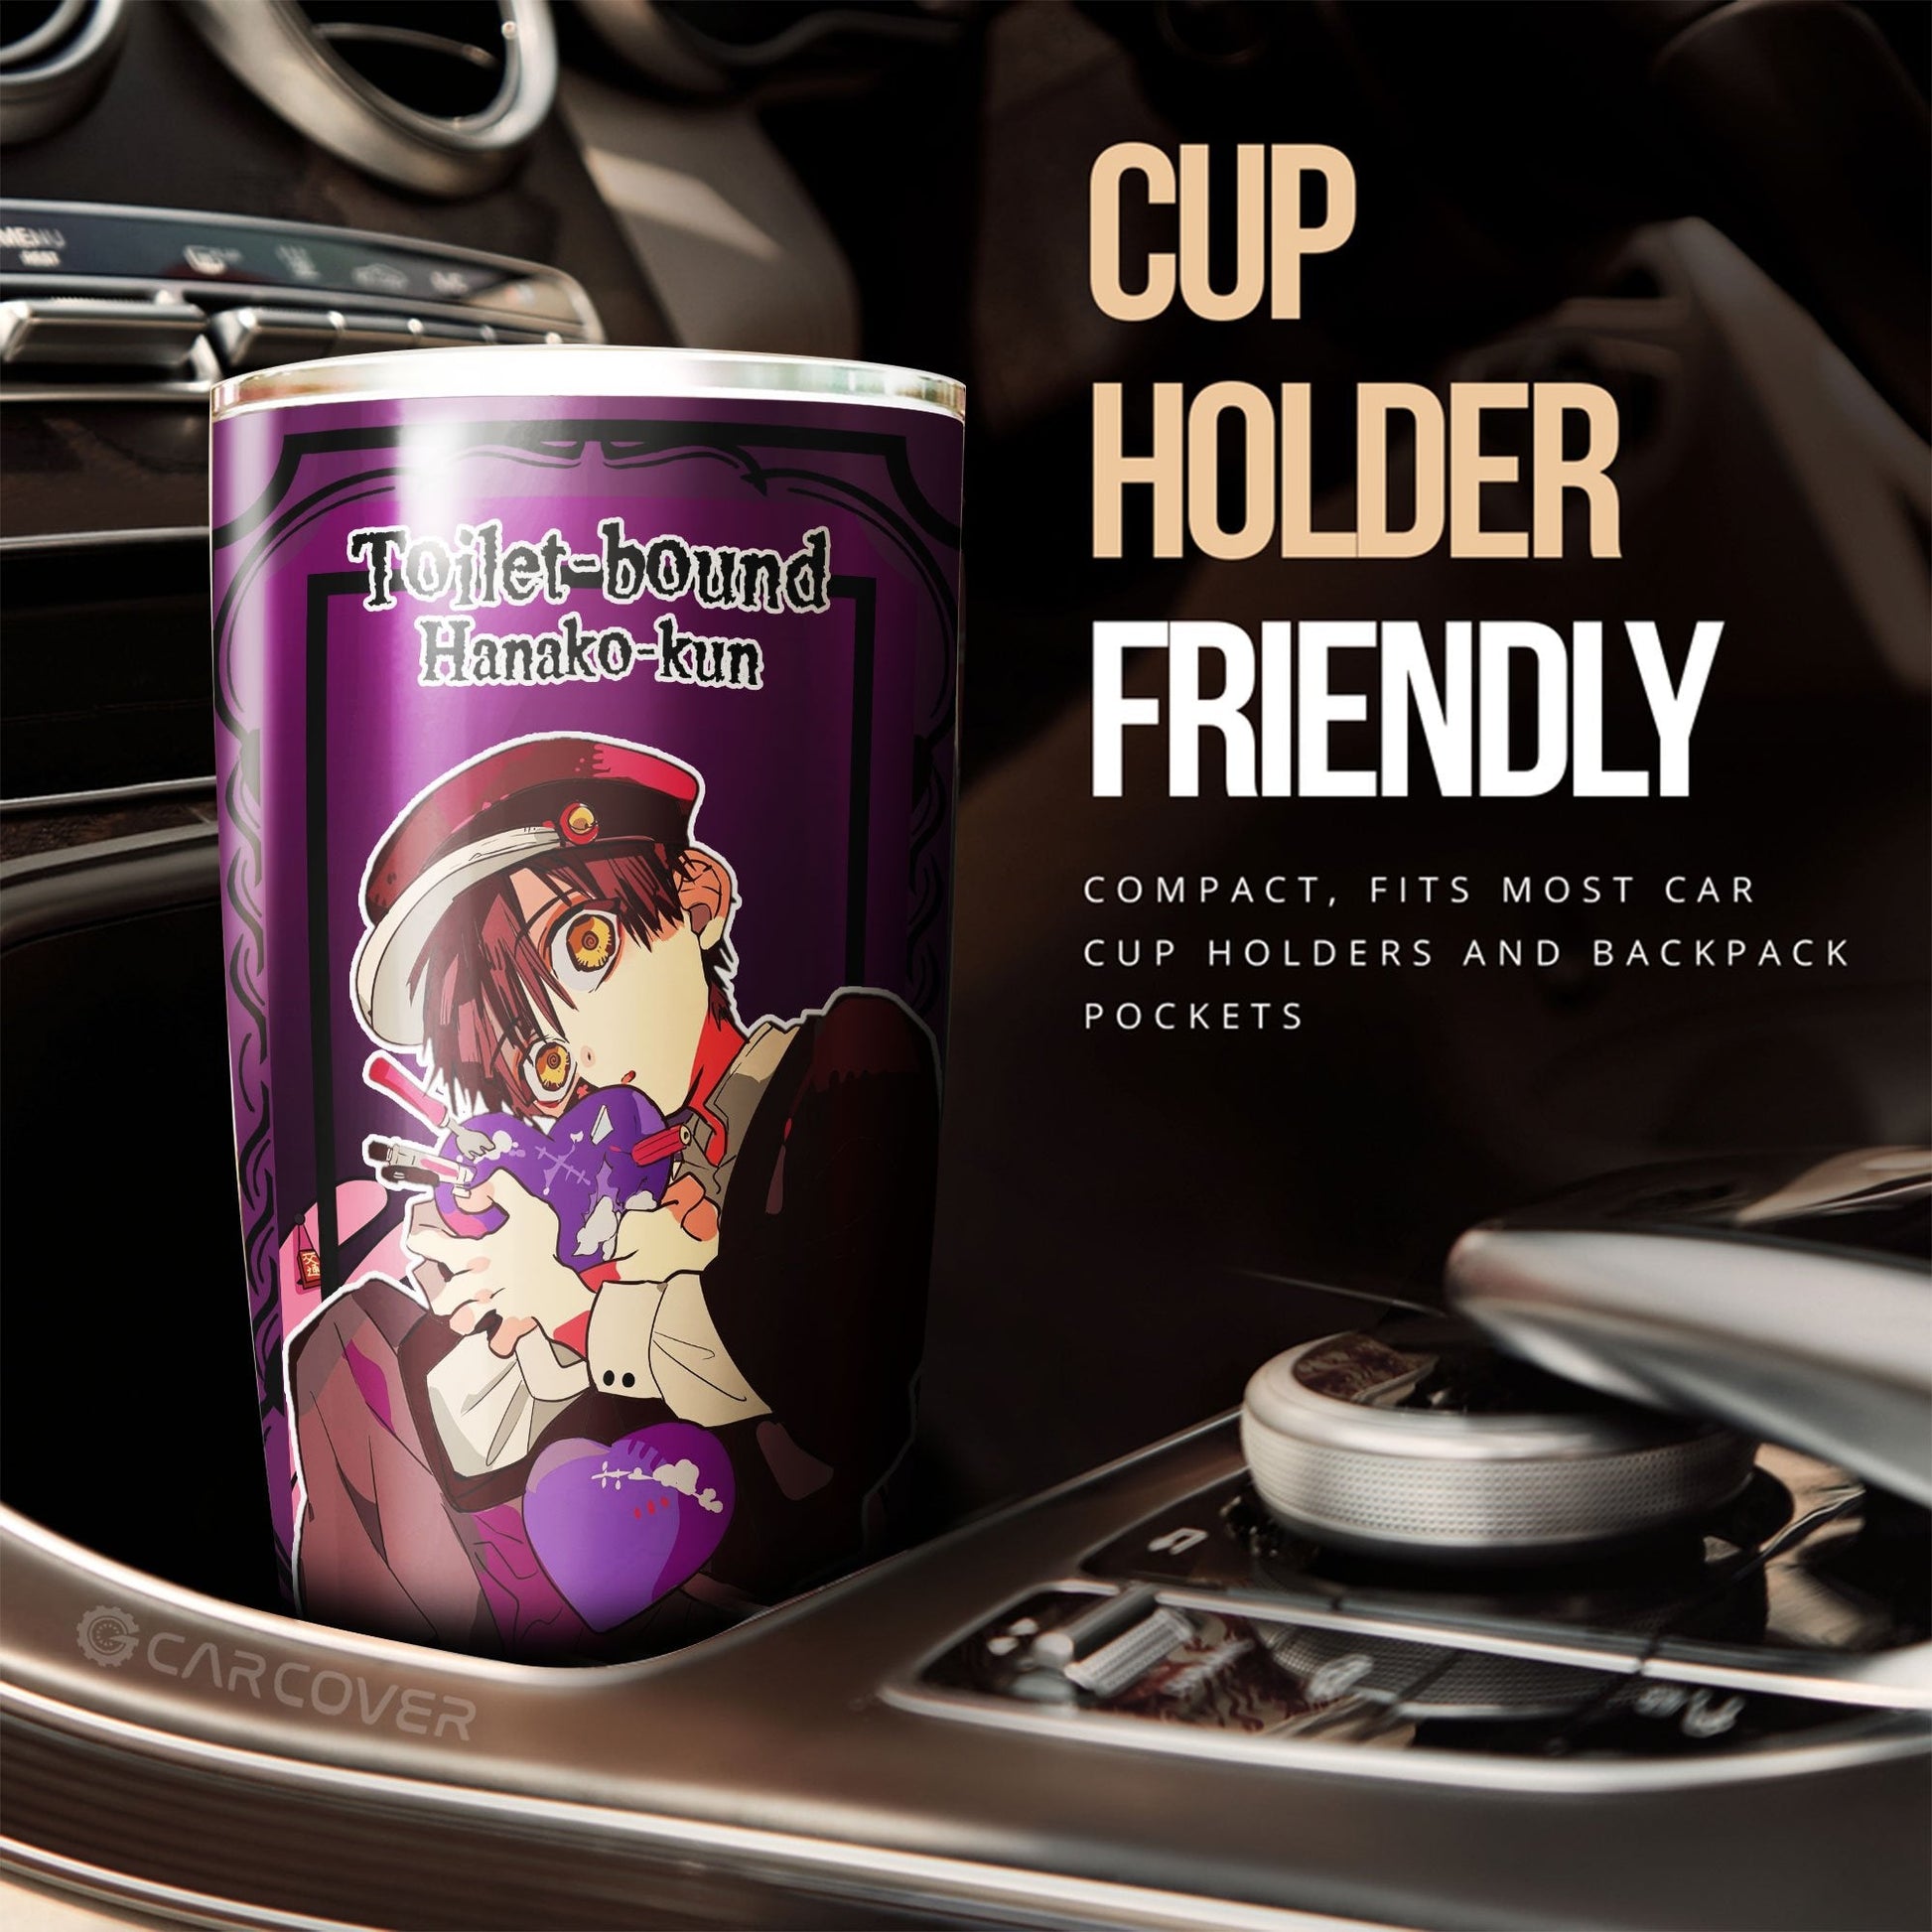 Yugi Tsukasa Tumbler Cup Custom Toilet-Bound Hanako-kun Anime Car Accessories - Gearcarcover - 2